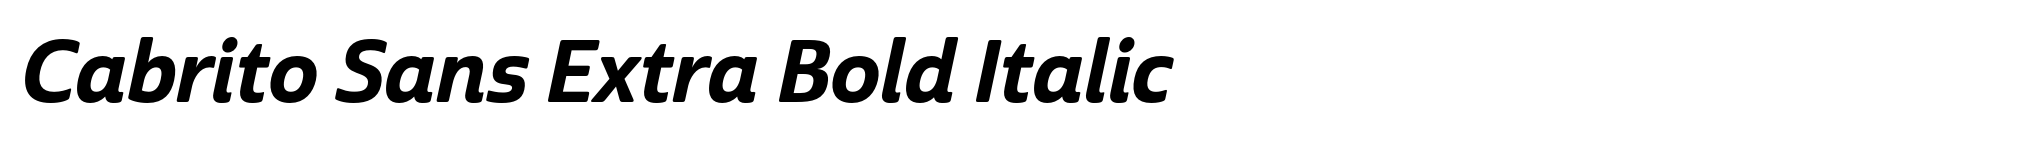 Cabrito Sans Extra Bold Italic image